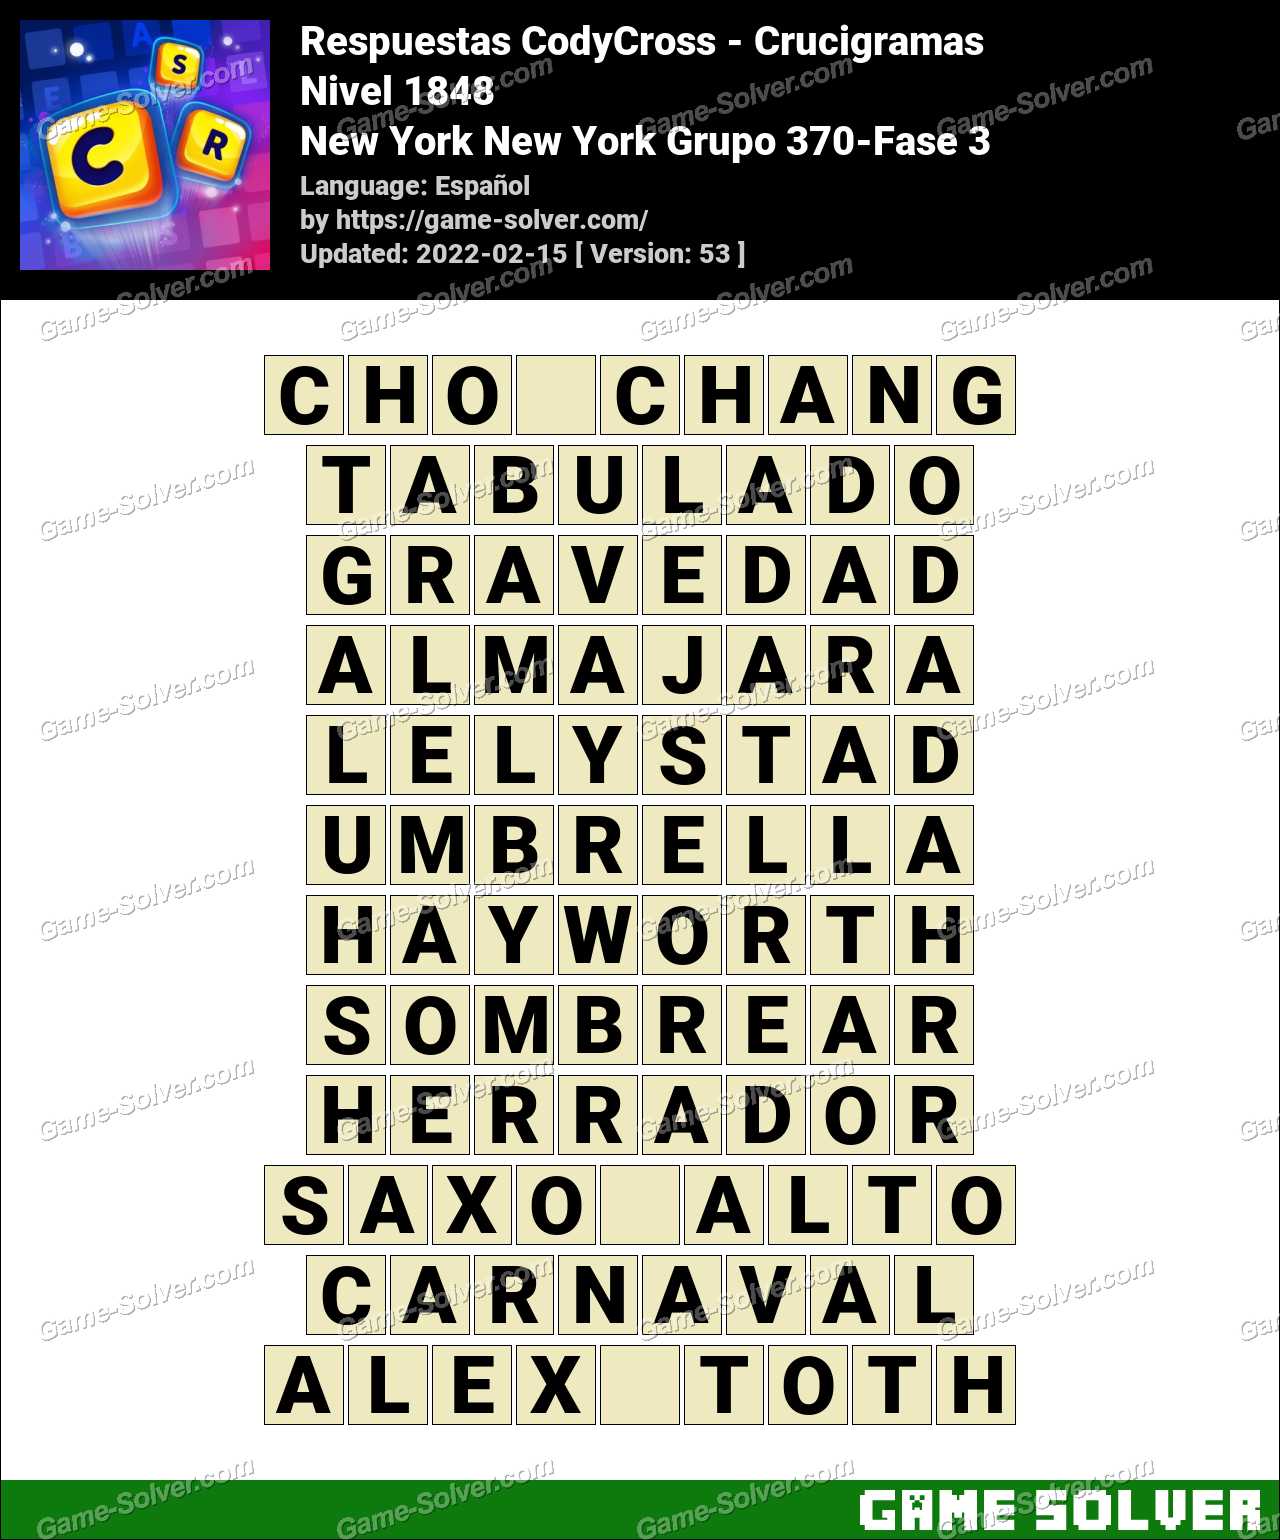 Respostas CodyCross New York, New York! Grupo 369-Fase 2 • Game Solver